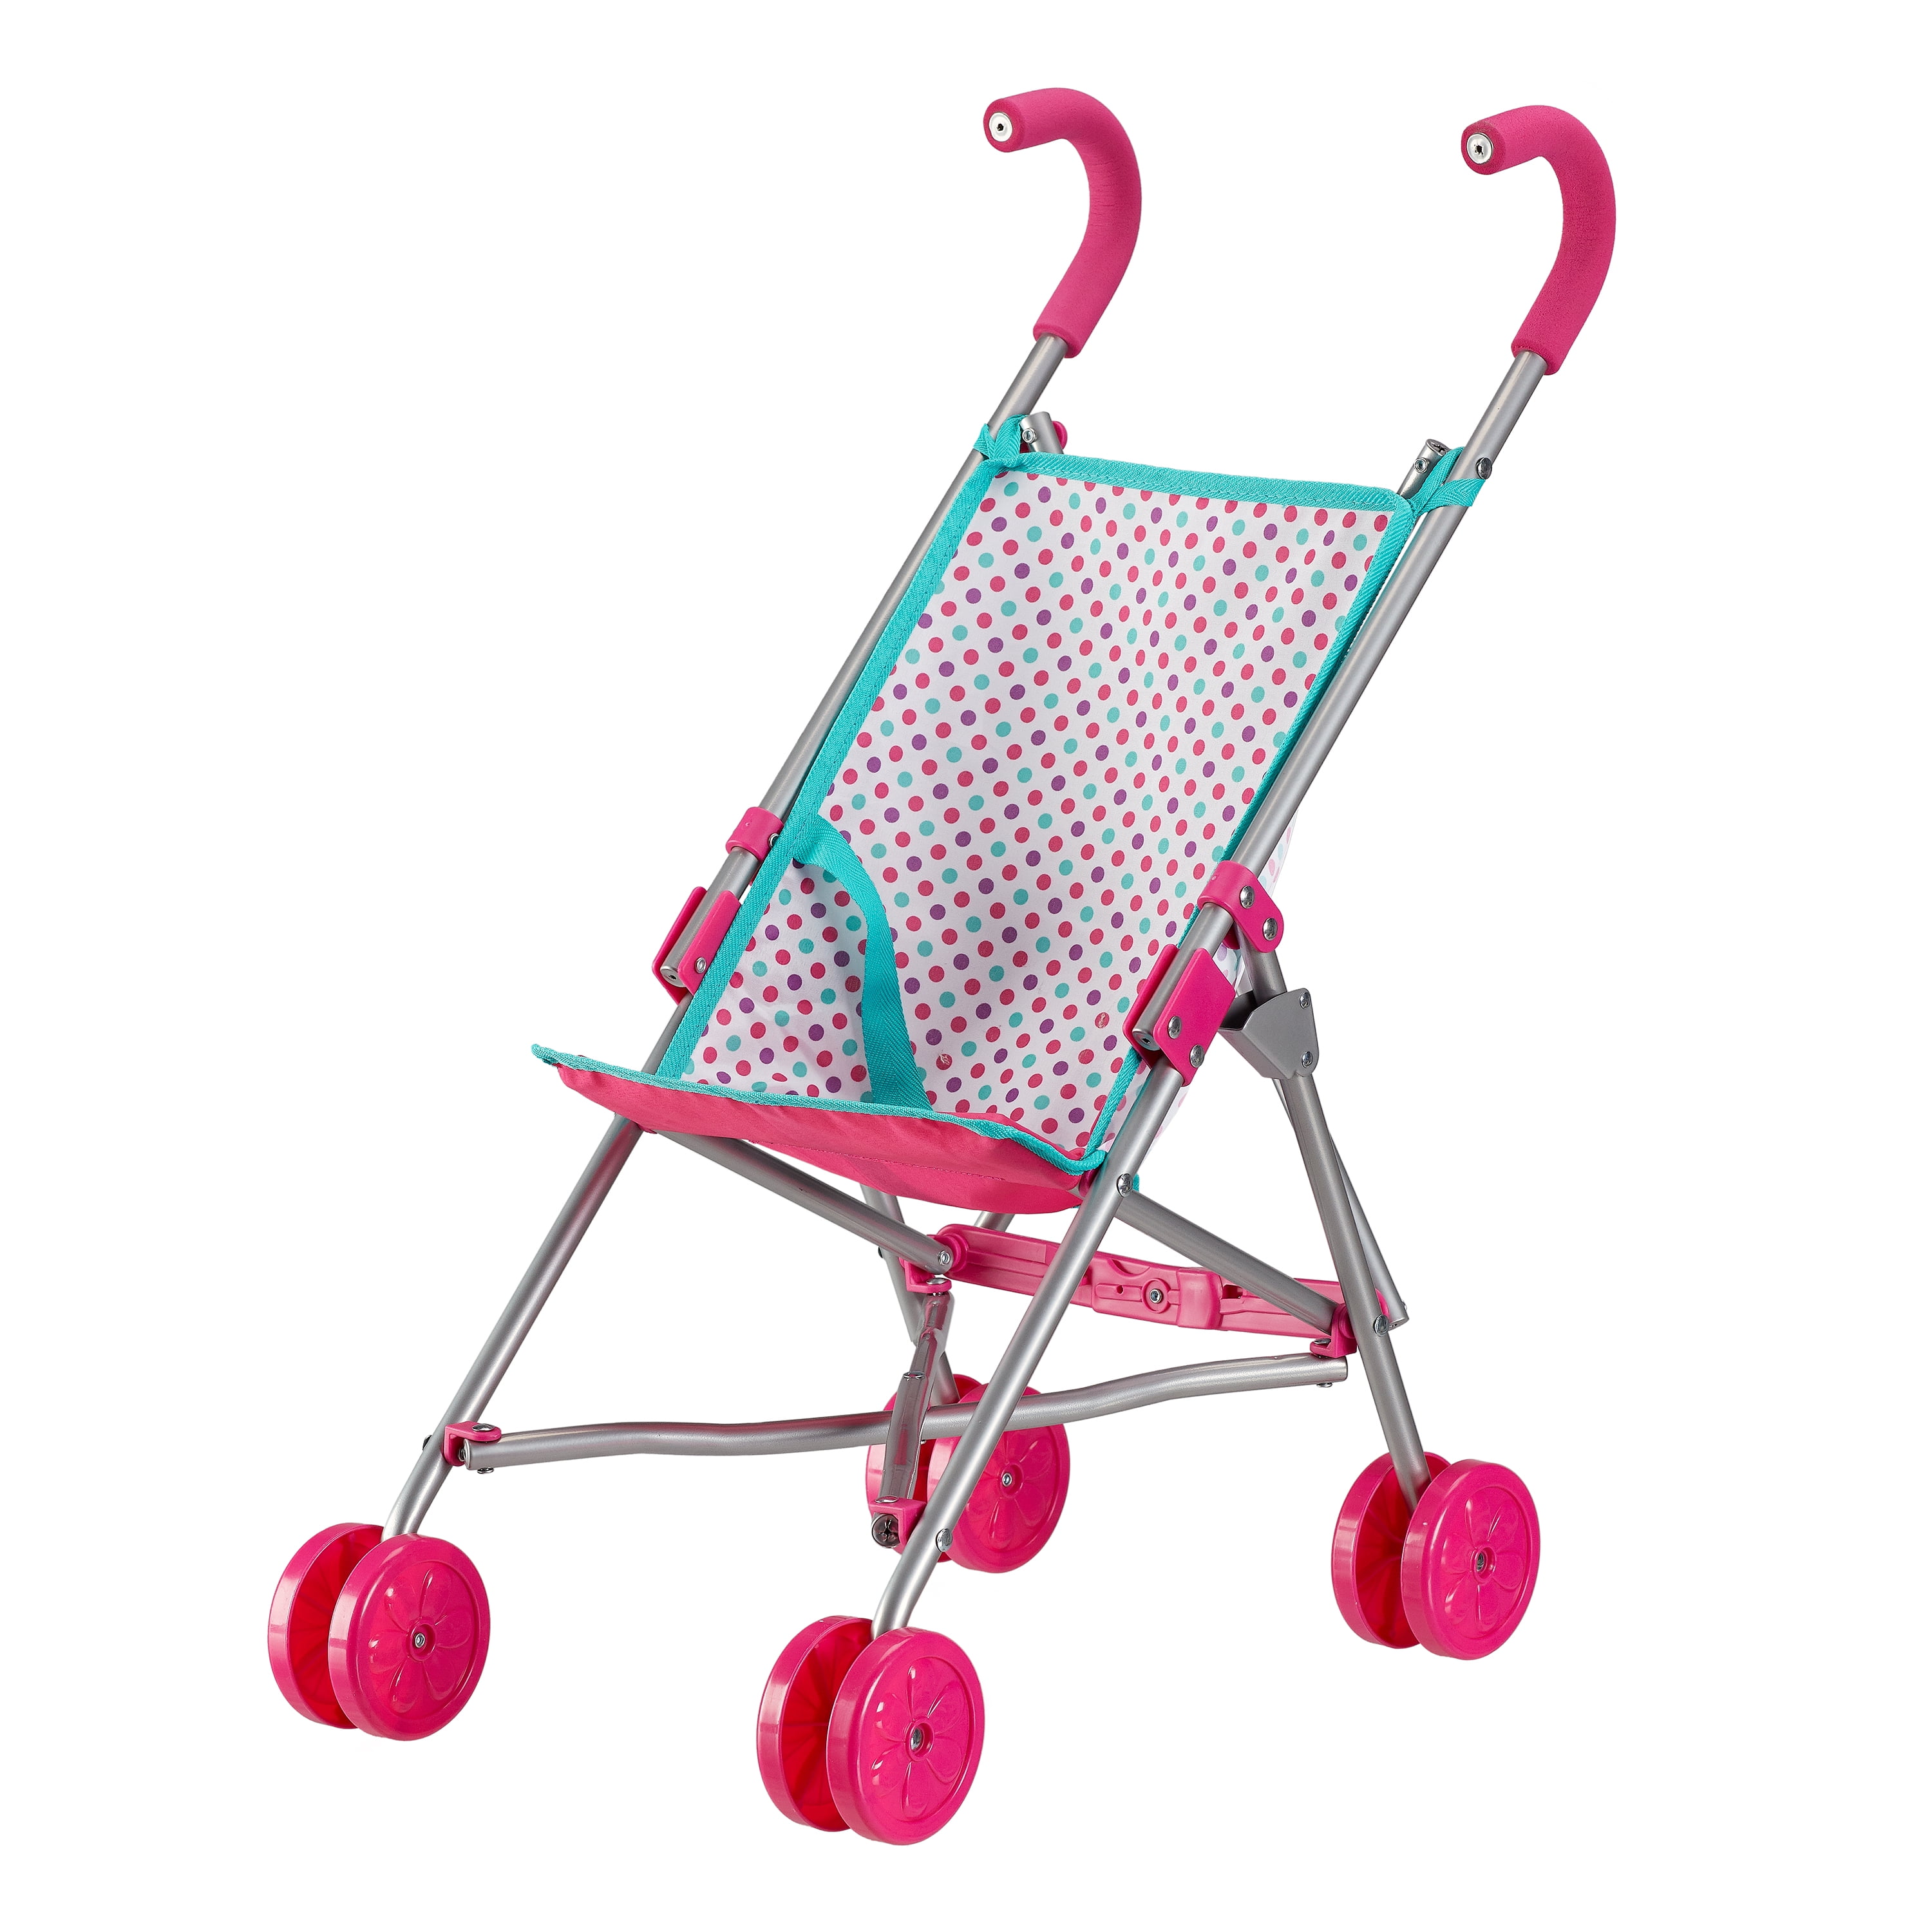 a toy stroller